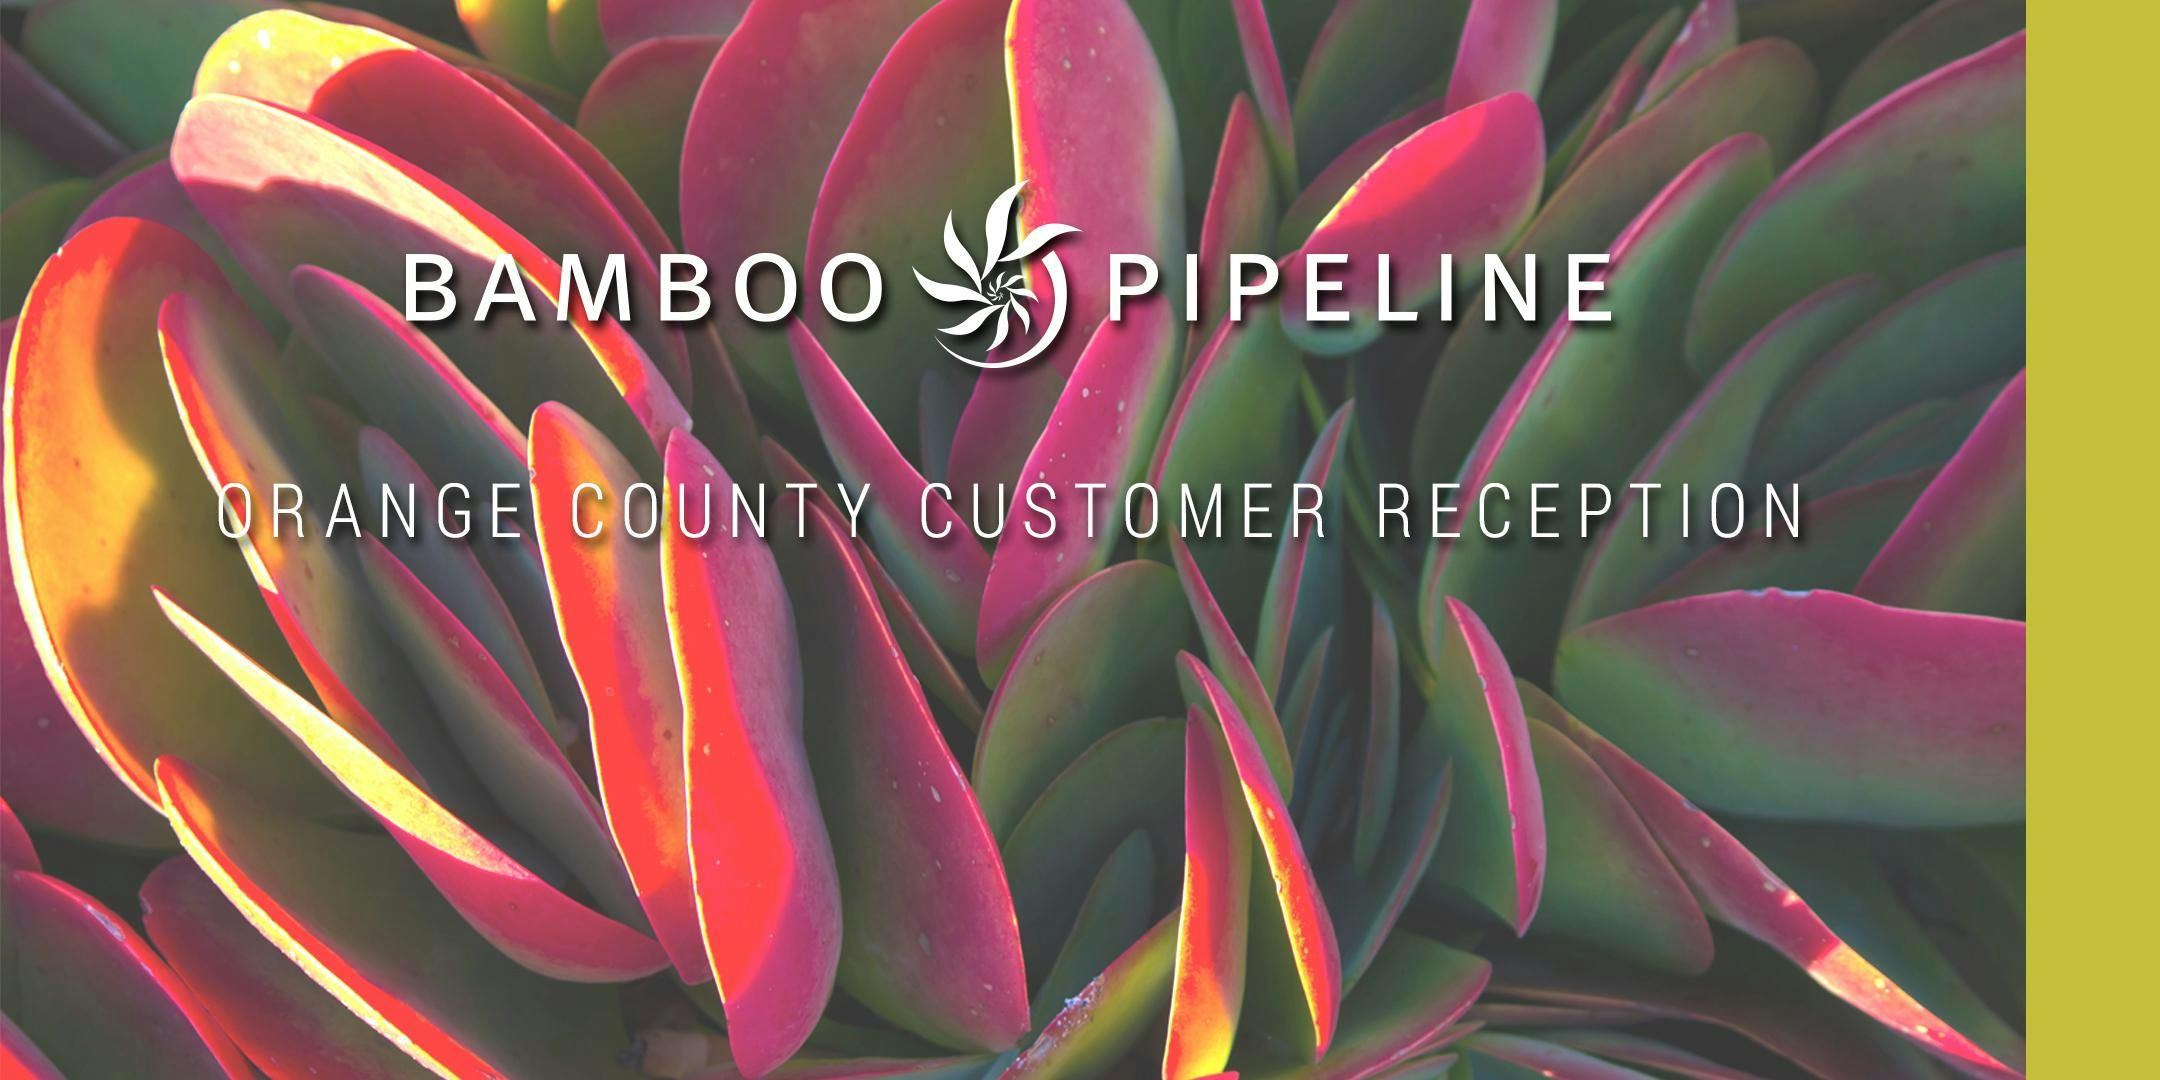 Bamboo Pipeline Customer Reception - Orange County